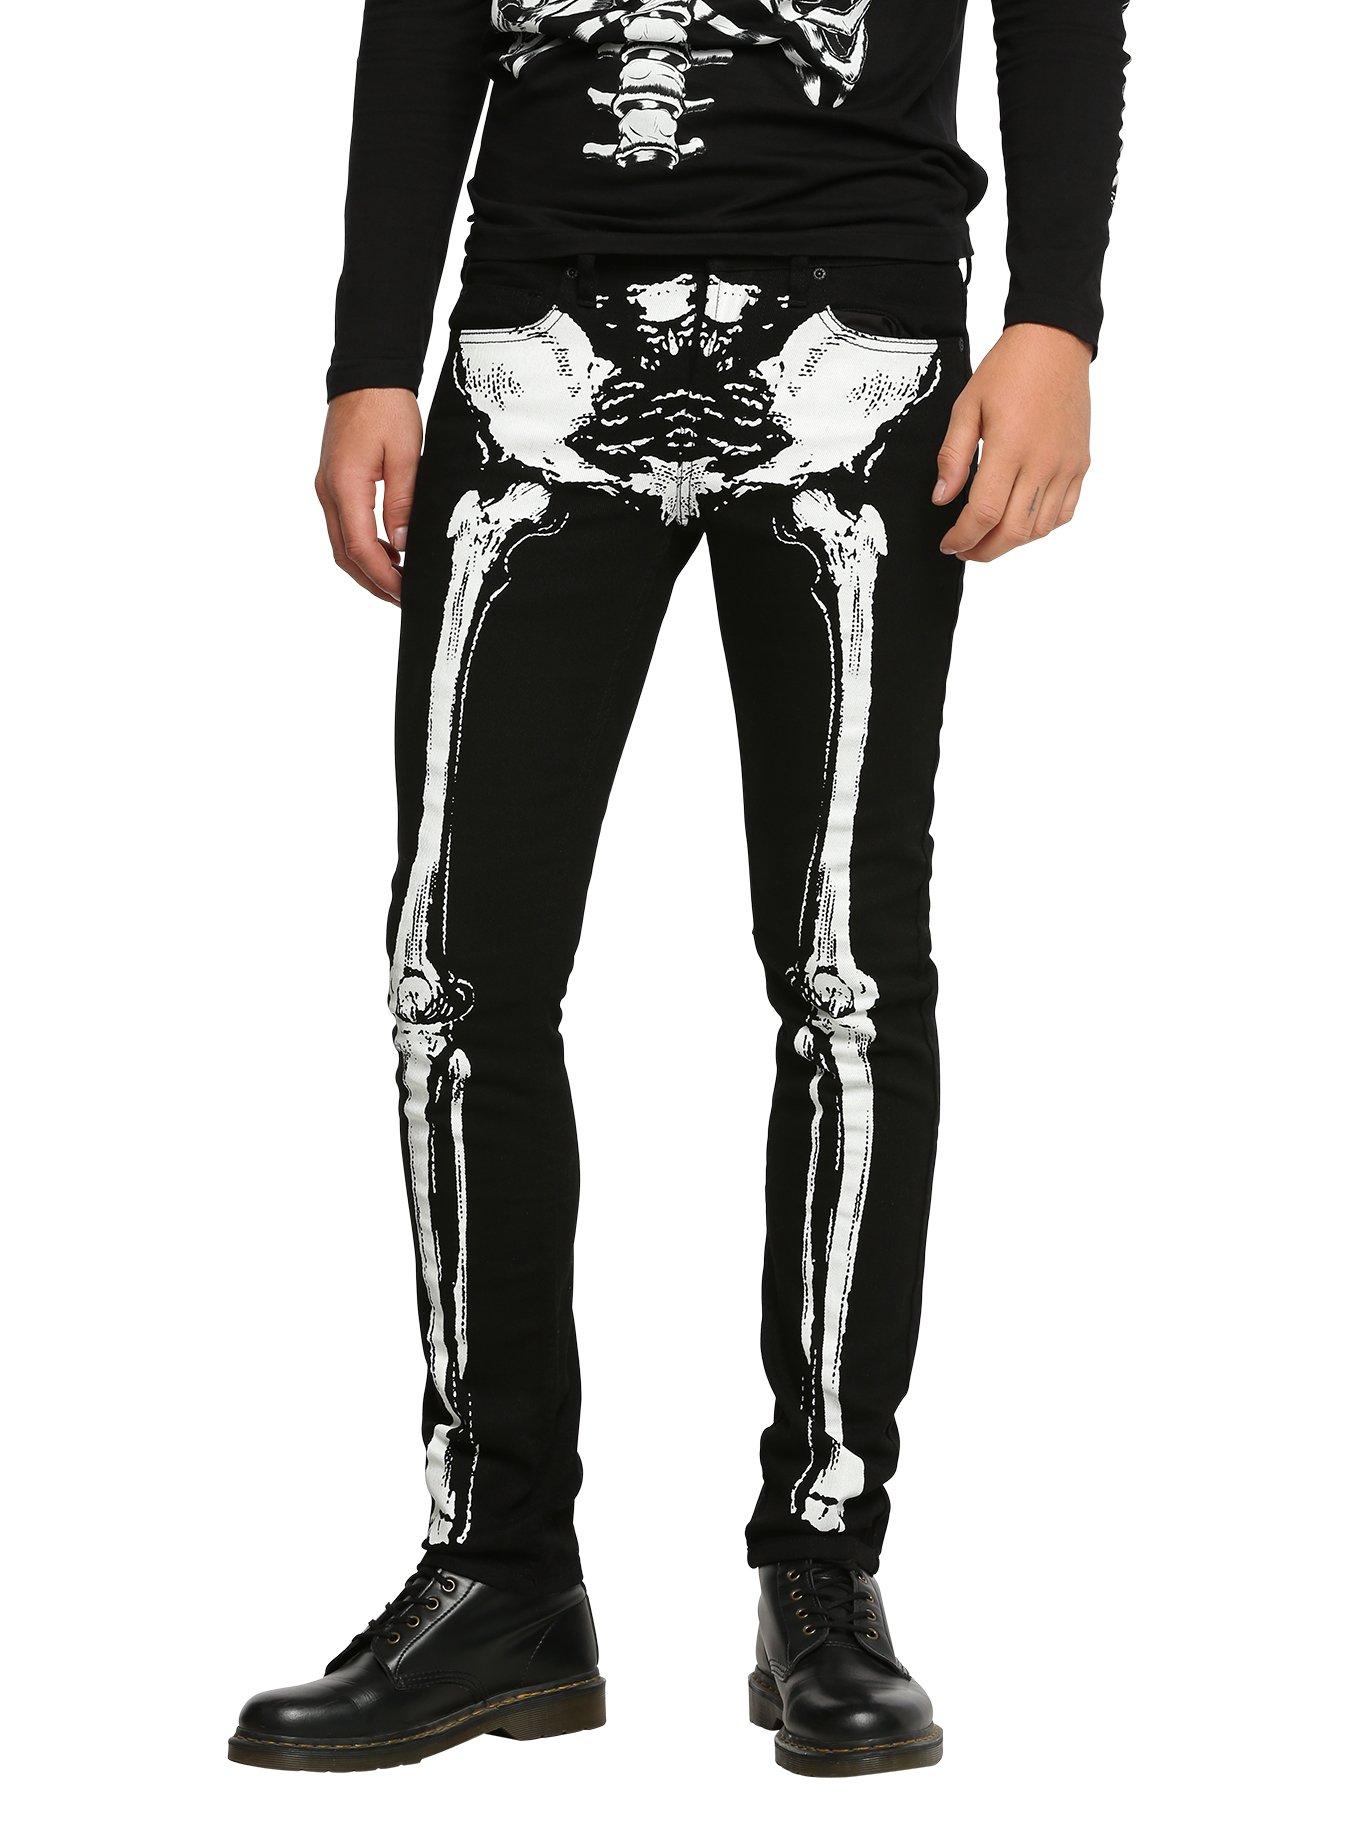 RUDE Black Skeleton Skinny Jeans, BLACK, hi-res